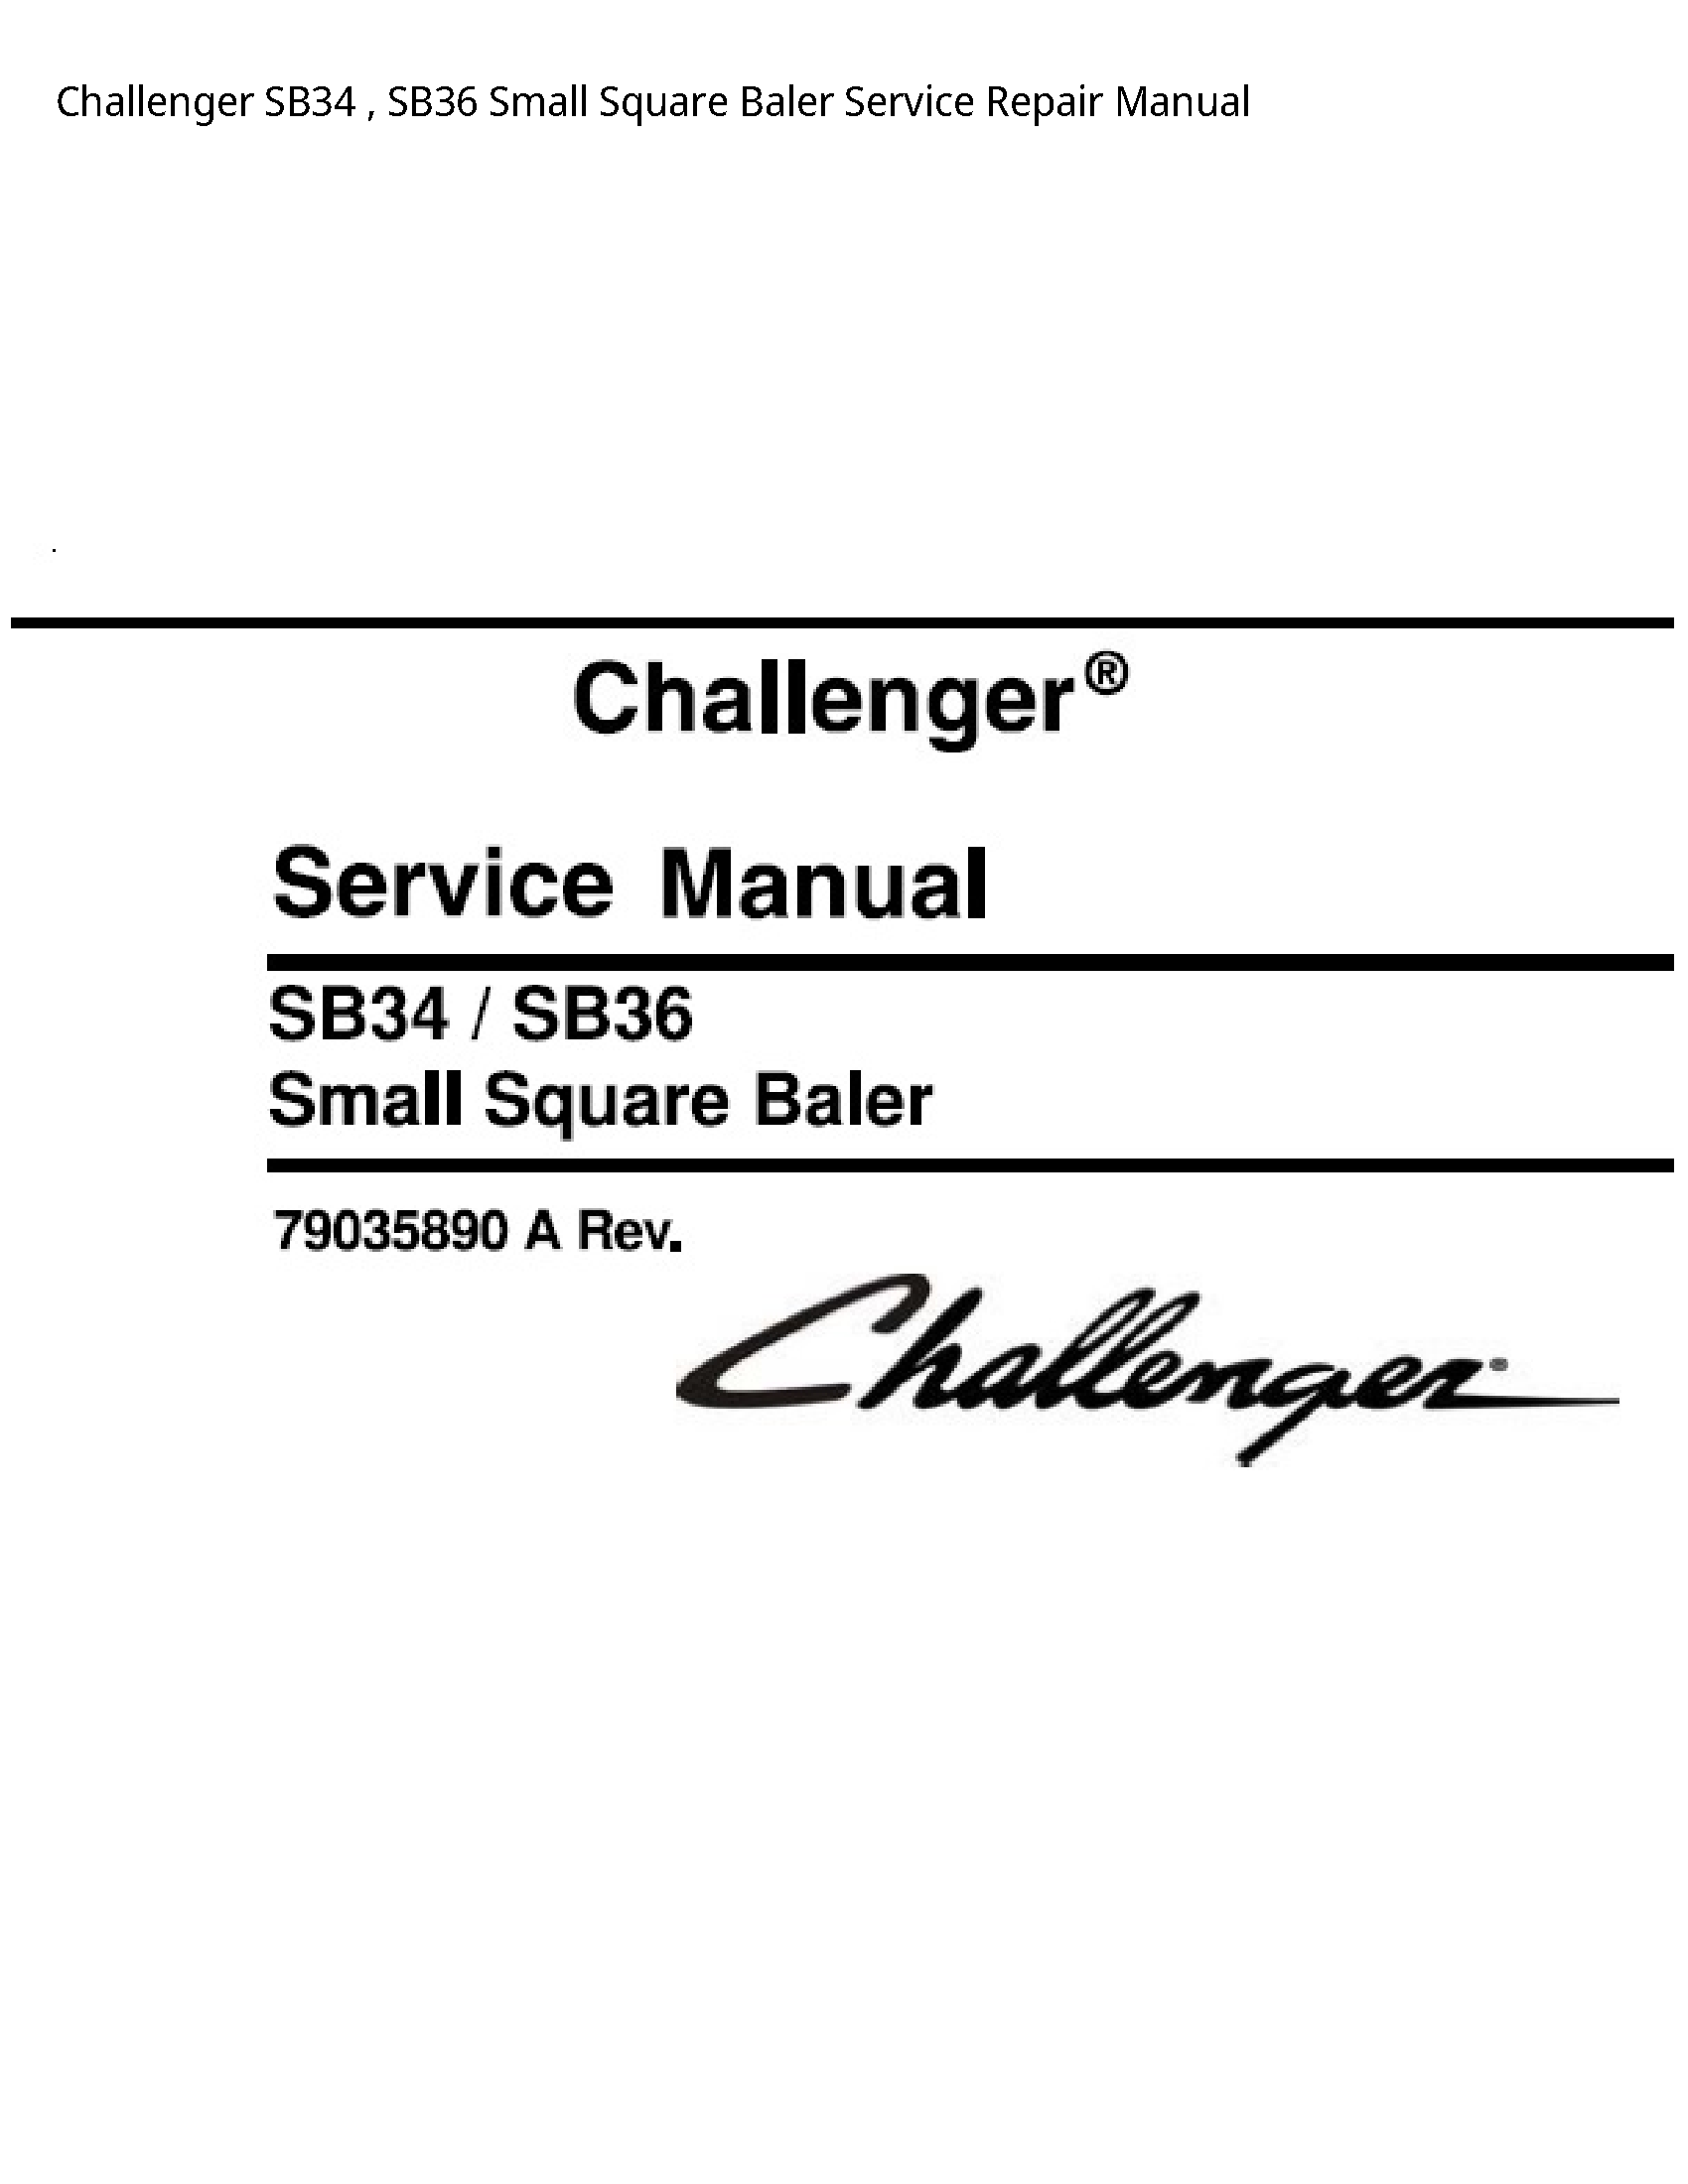 Challenger SB34 Small Square Baler manual